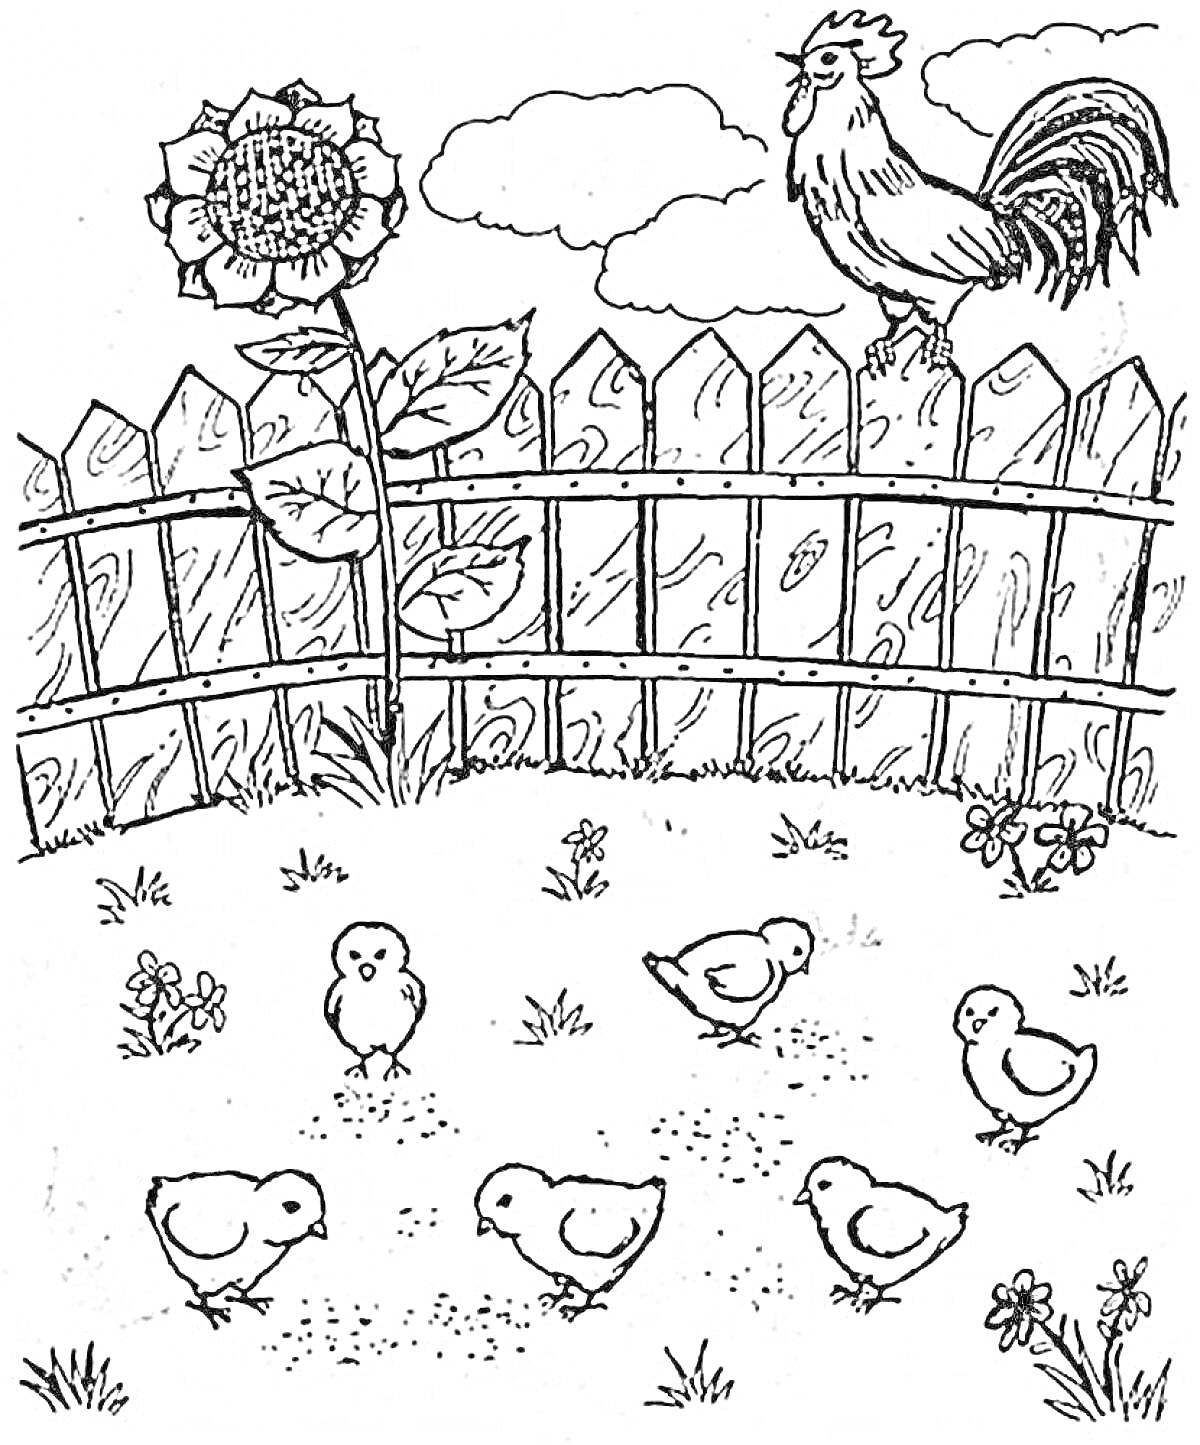 На раскраске изображено: Забор, Петух, Цыплята, Облака, Трава, Цветы